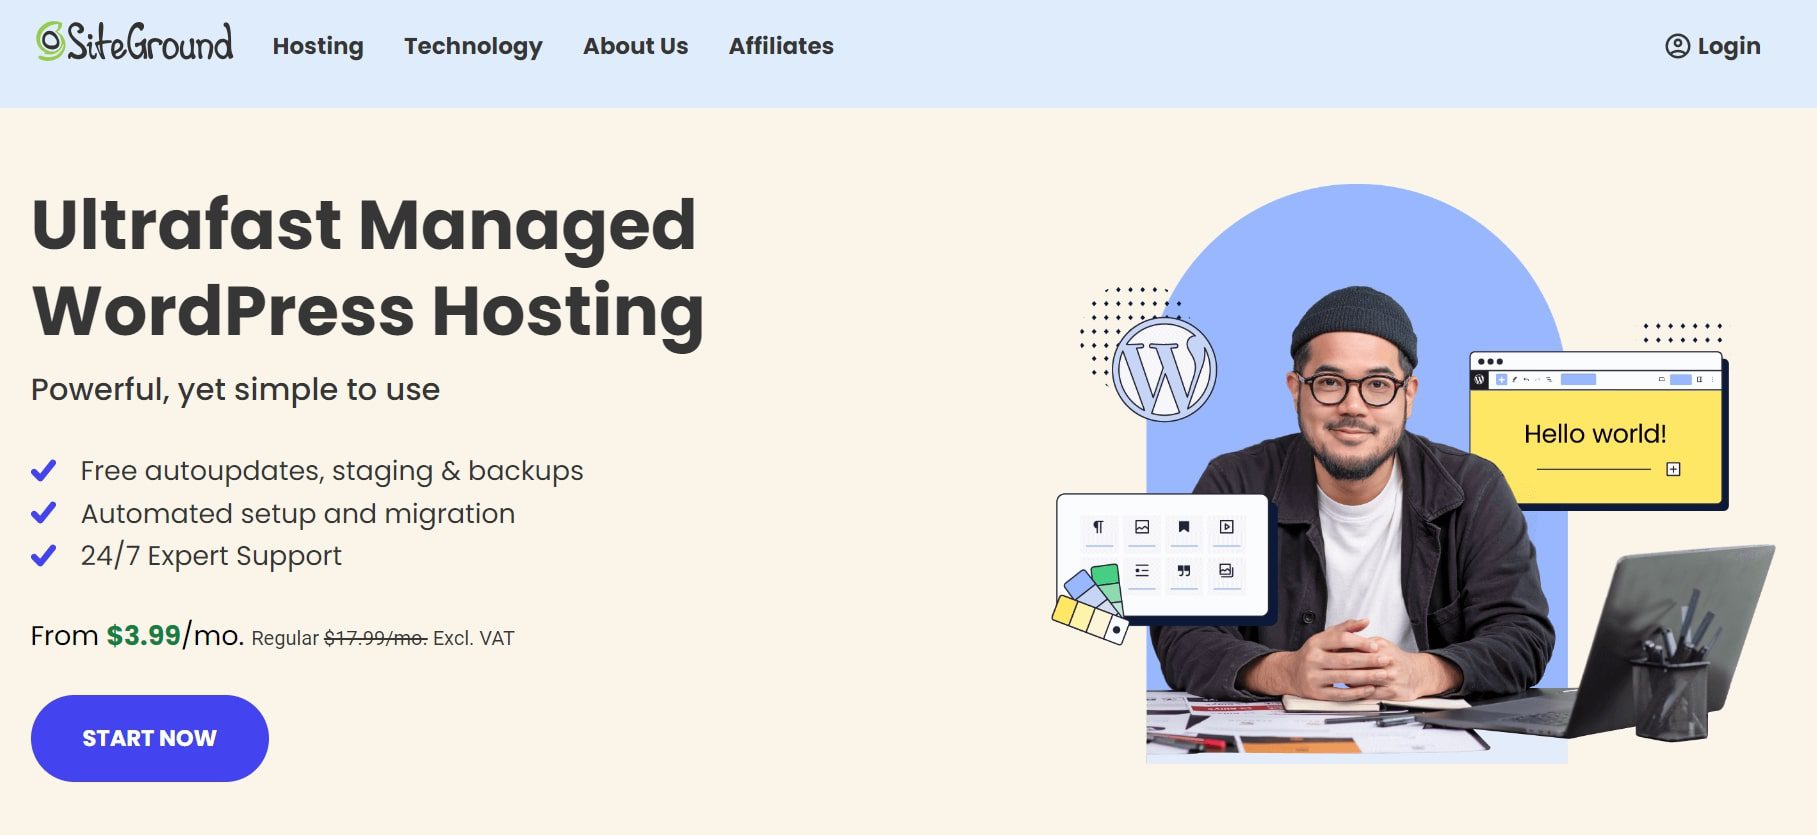 SiteGround WordPress Hosting